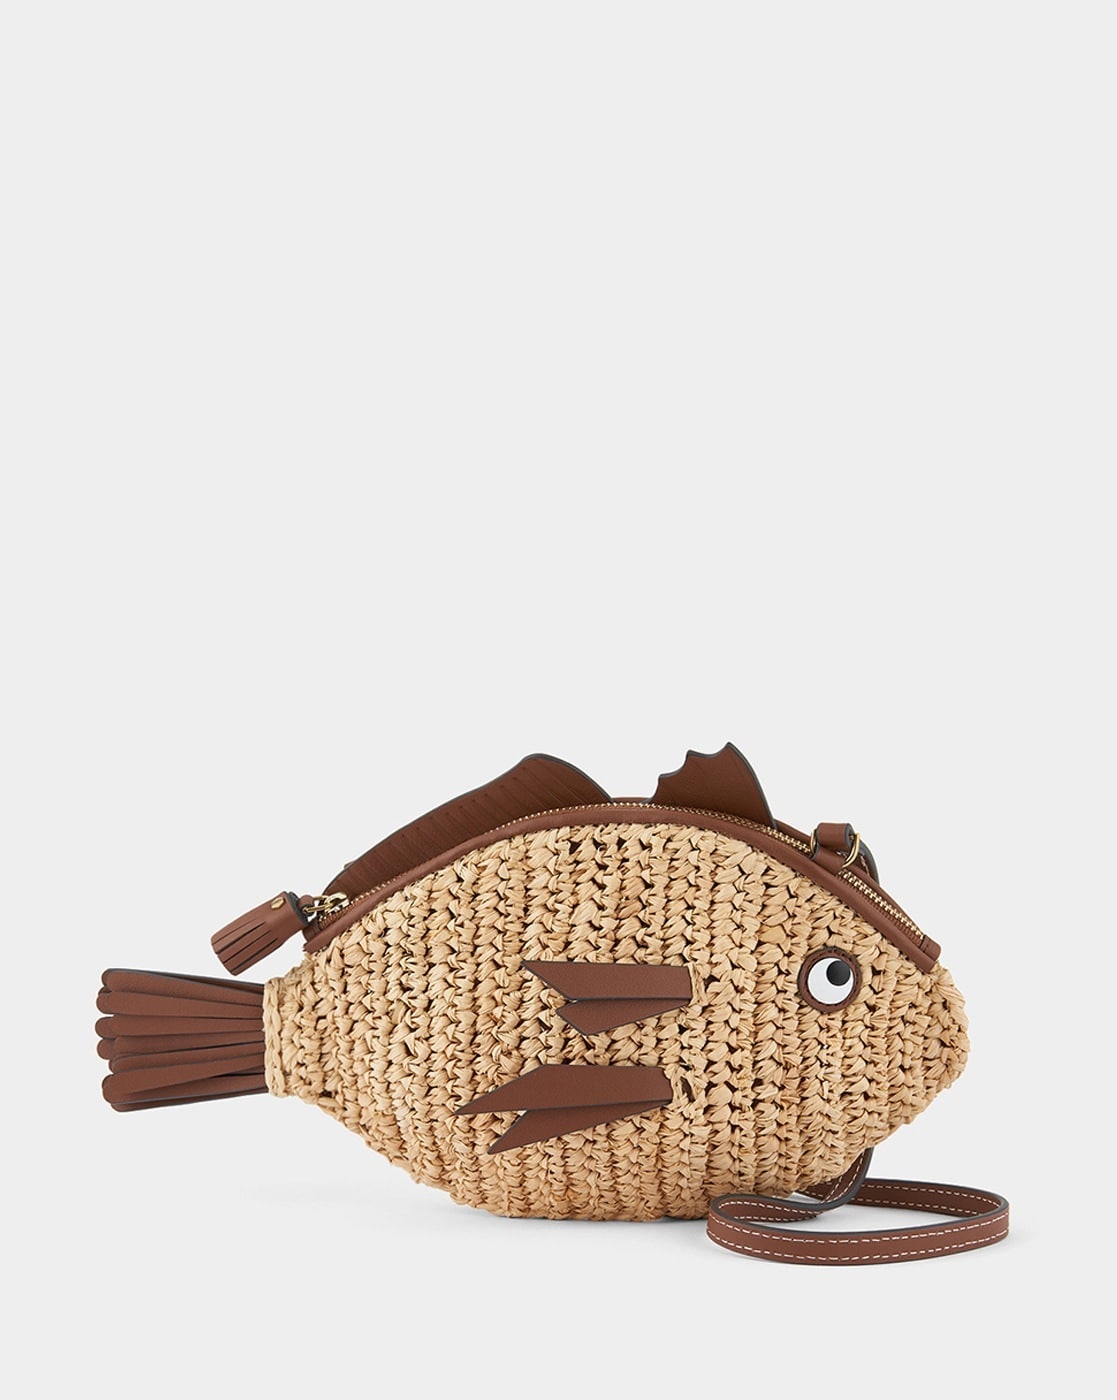 Armor Lion Fish Bag for Sale Online | Divers Supply